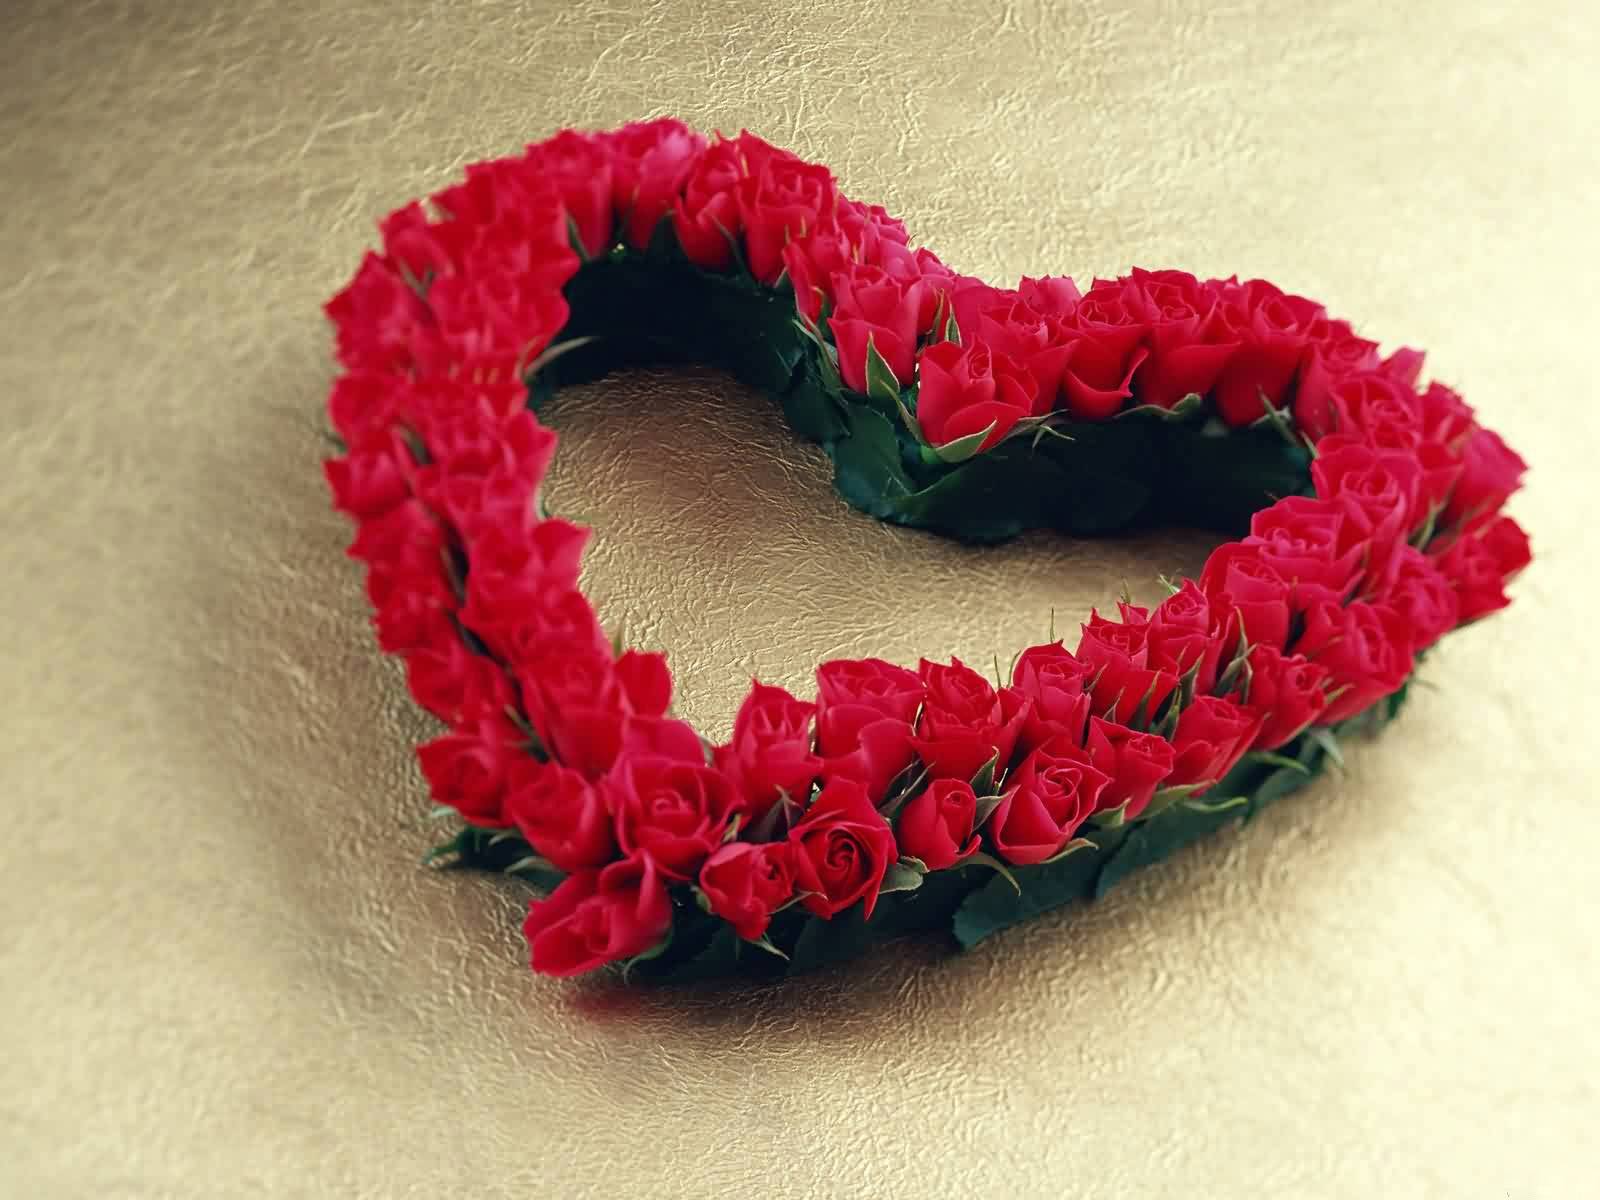 Desktop Wallpaper · Gallery · Nature · Heart shaped red rose